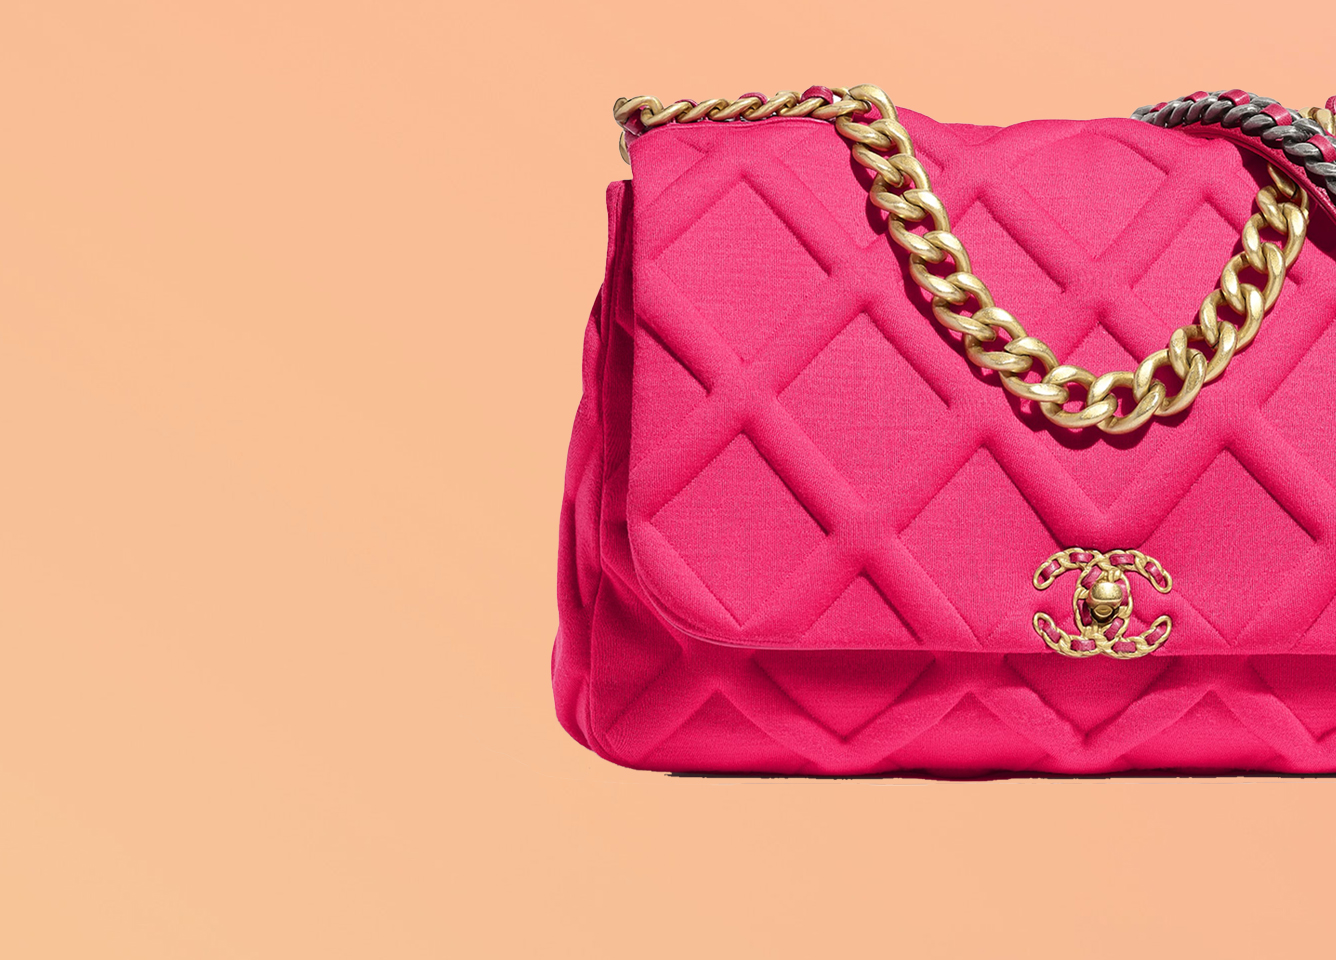 How to Sell Your Chanel Handbag?